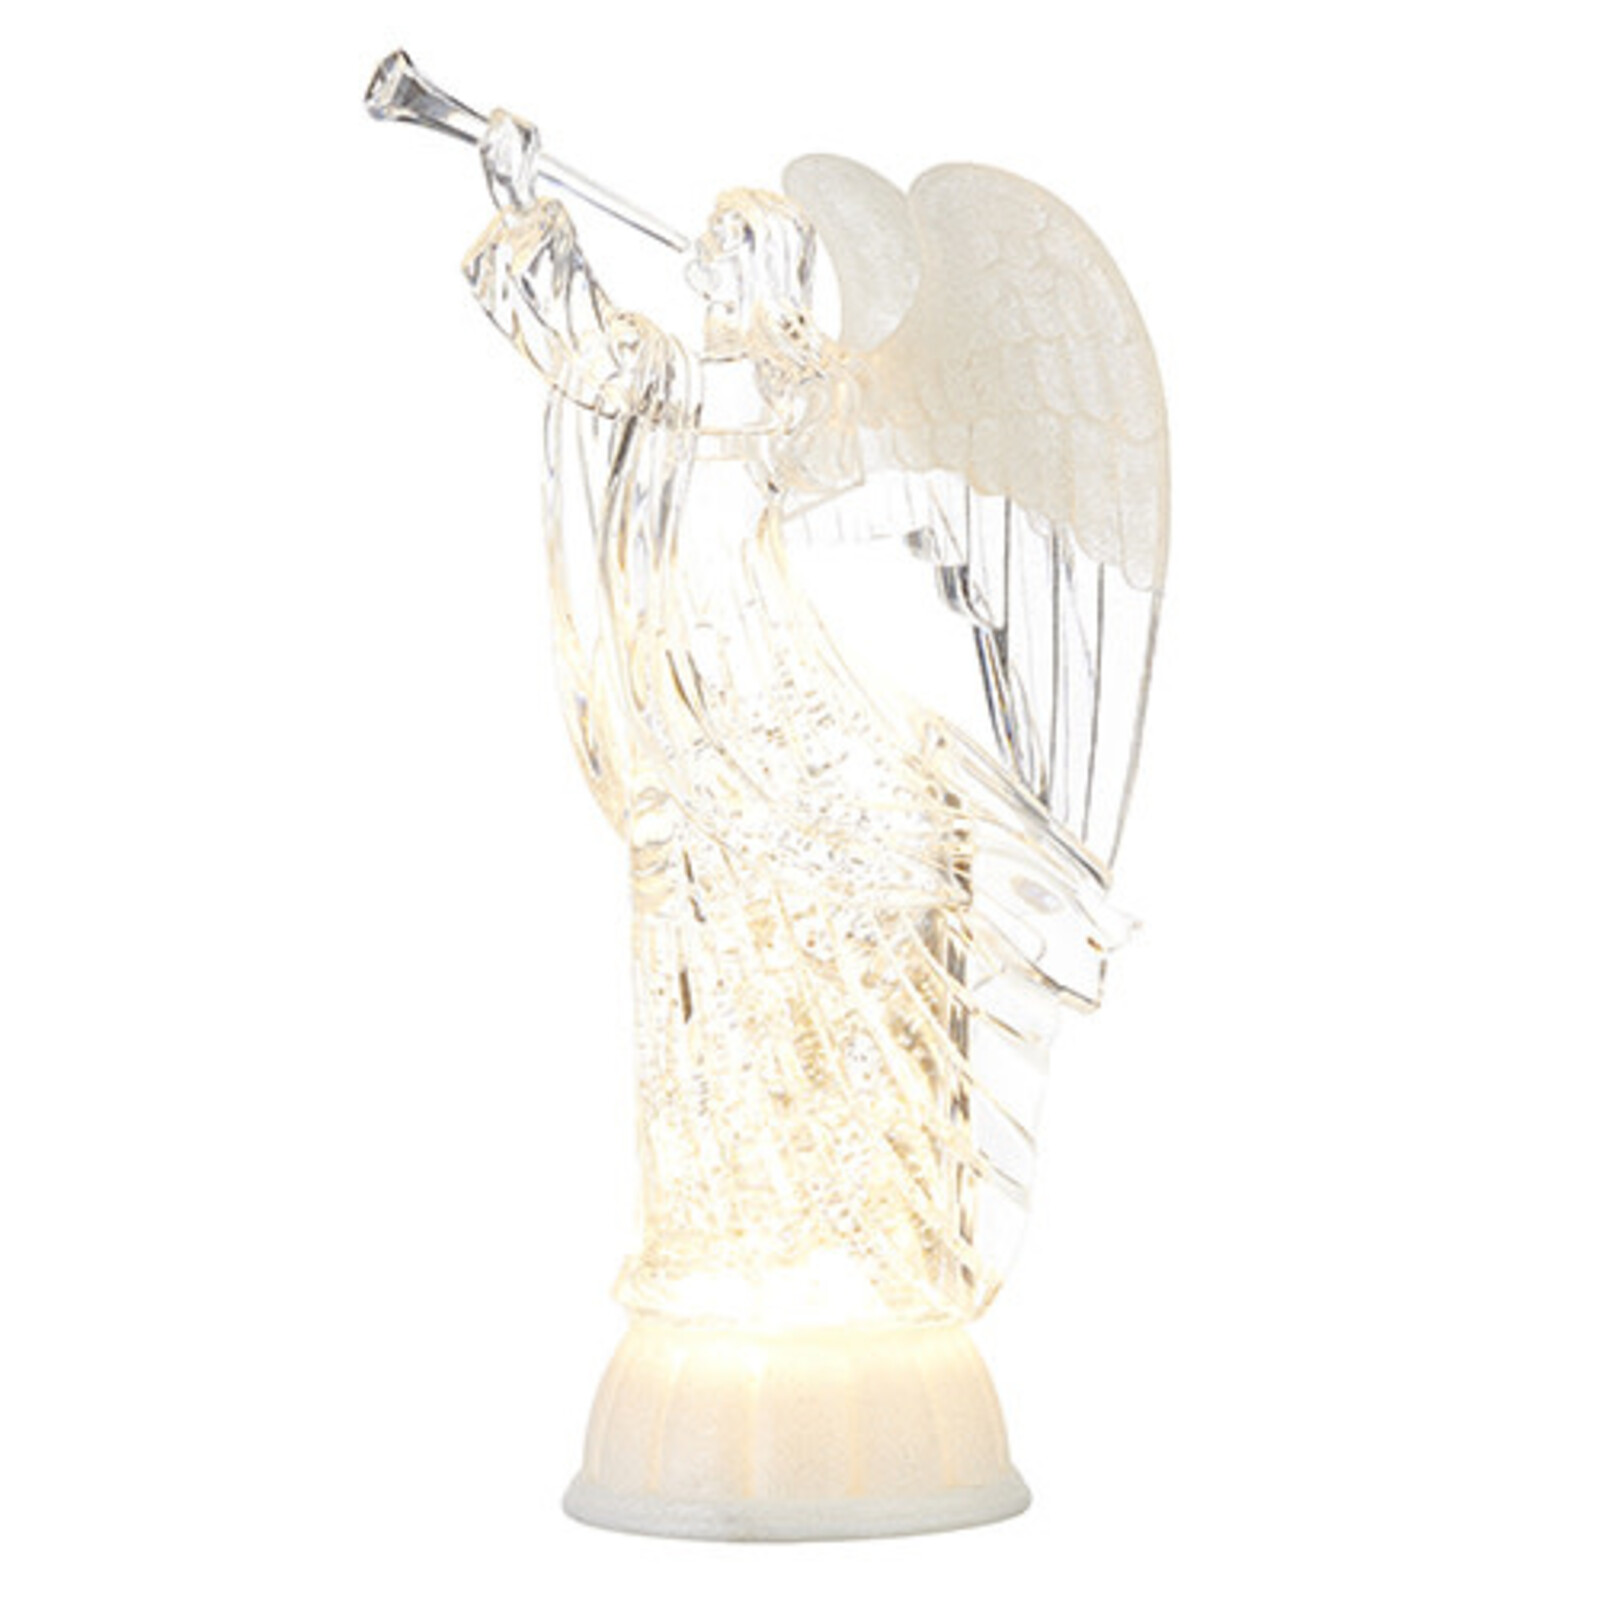 RAZ Imports Inc. 12" Trumpet Angel Light Up Figurine loading=